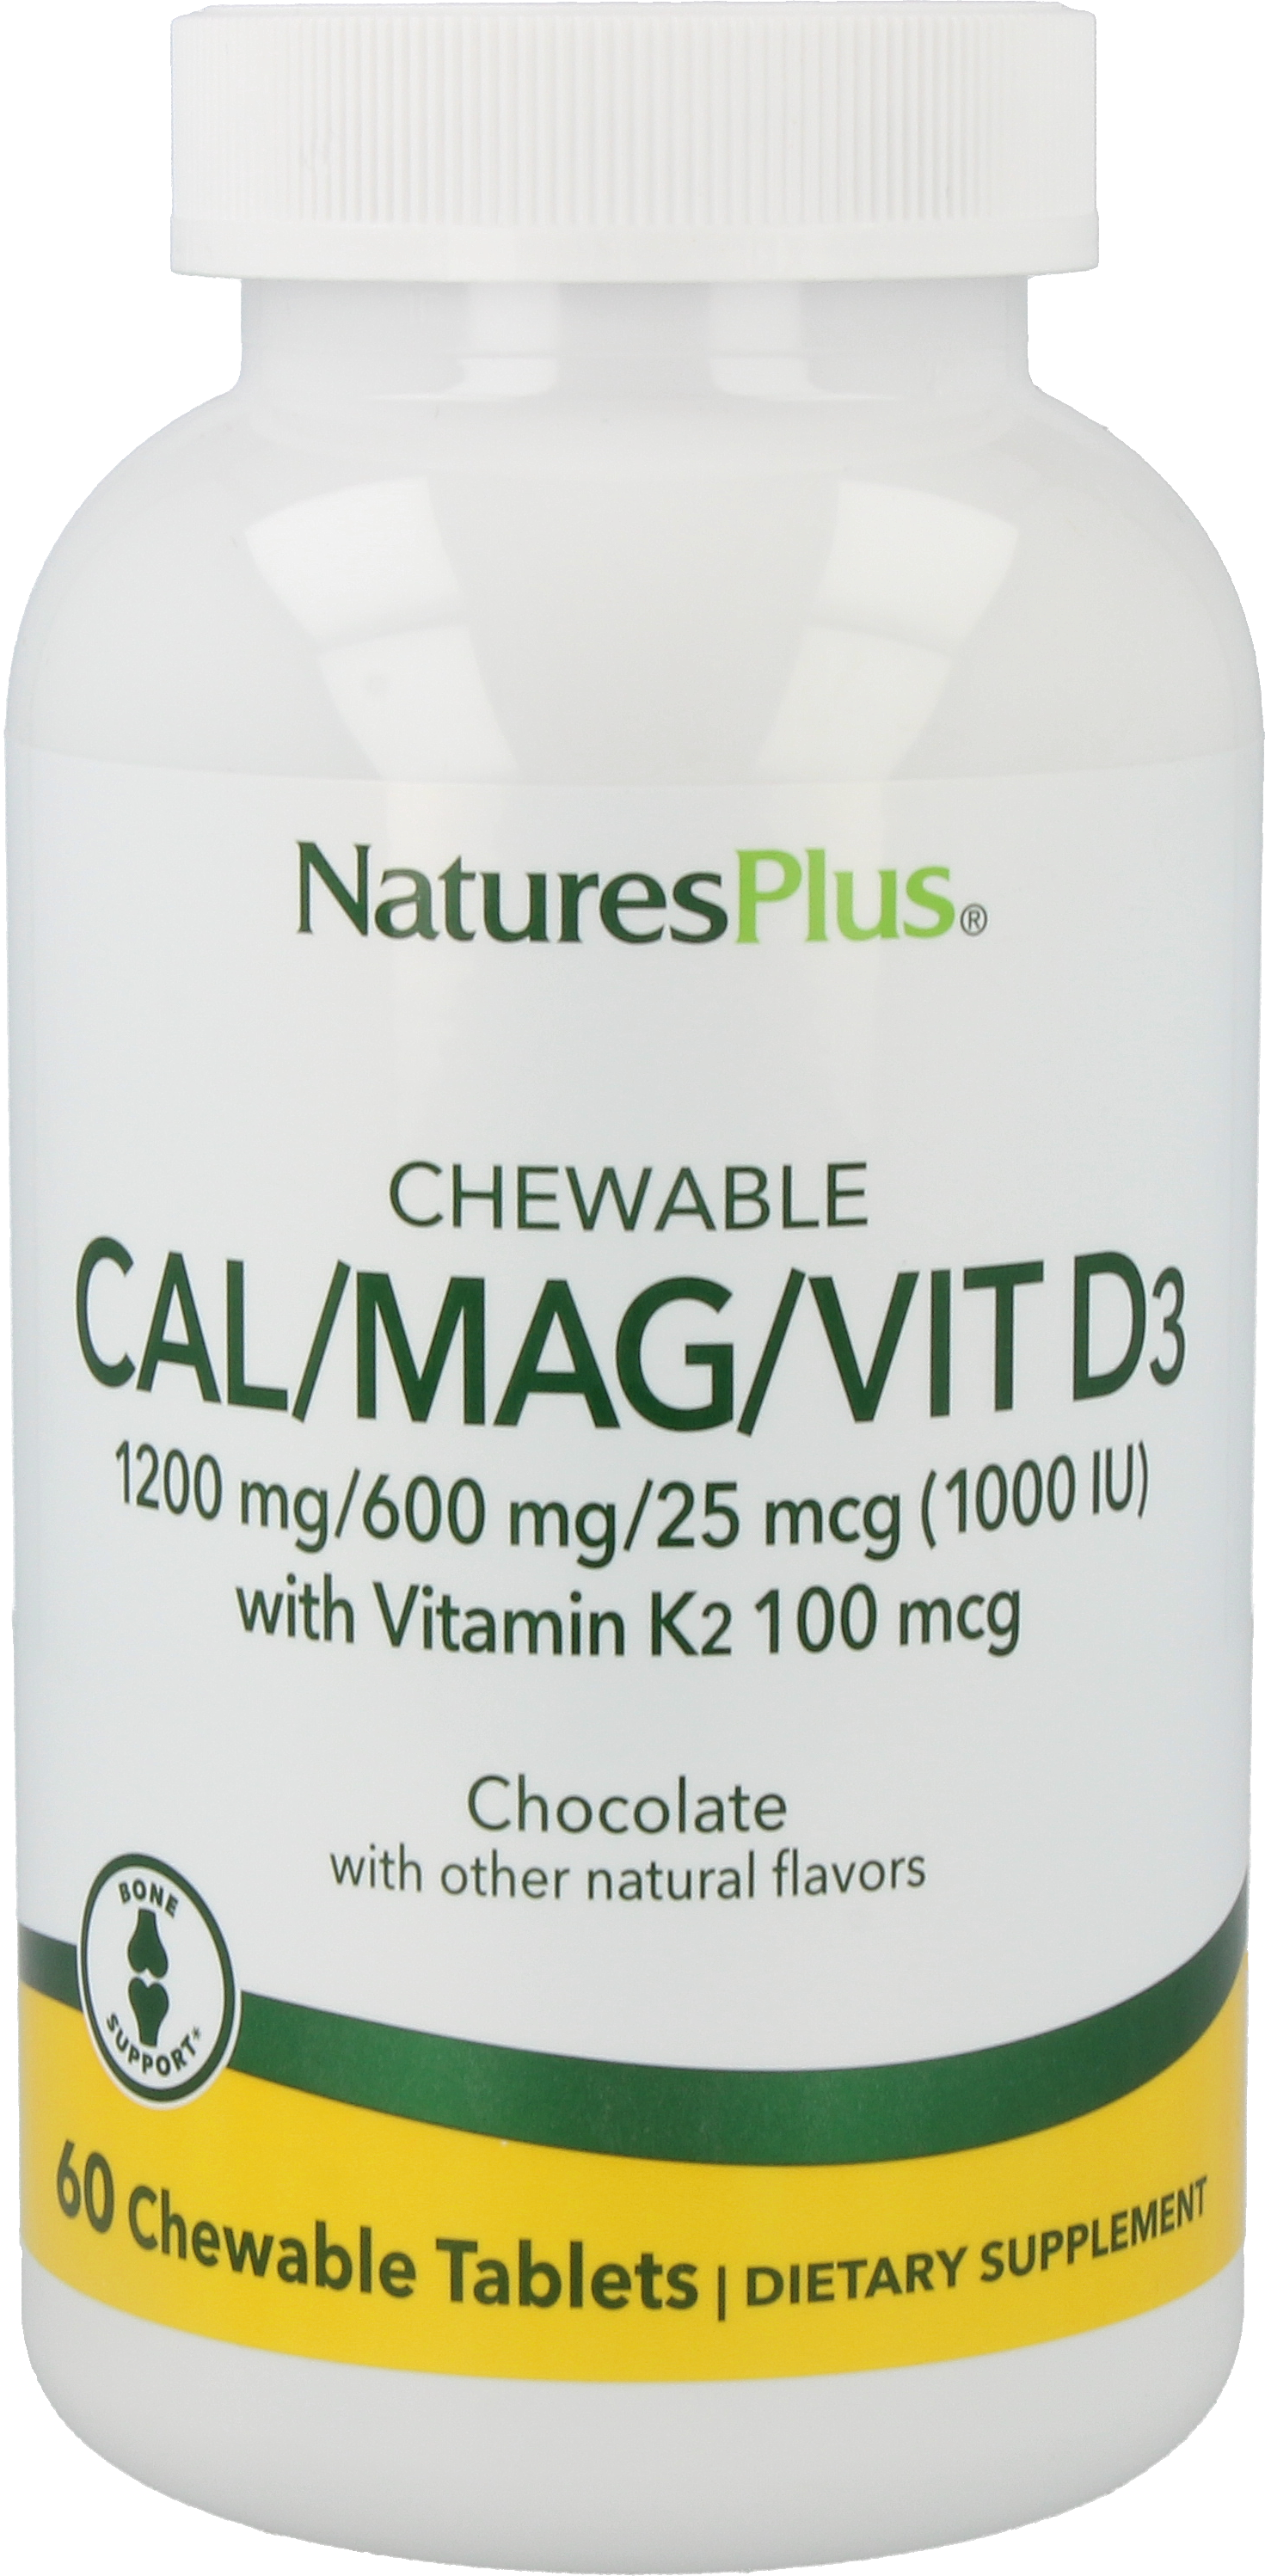 Cal/Mag/Vit. D3 with Vitamin K2 